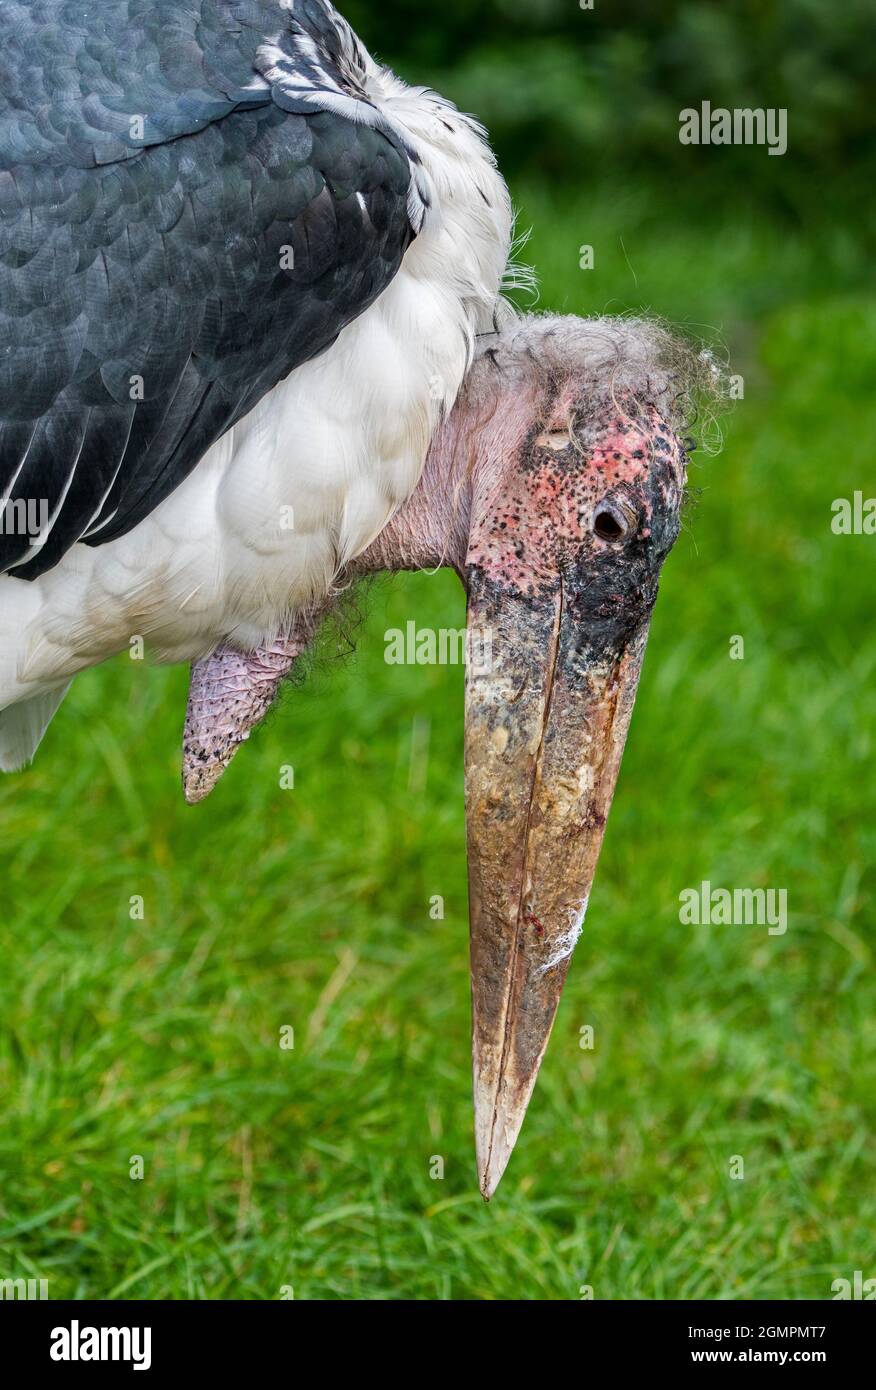 Marabou stork (Leptoptilos crumenifer / Leptoptilos crumeniferus) close up portrait showing large beak and gular sac, native to Africa Stock Photo